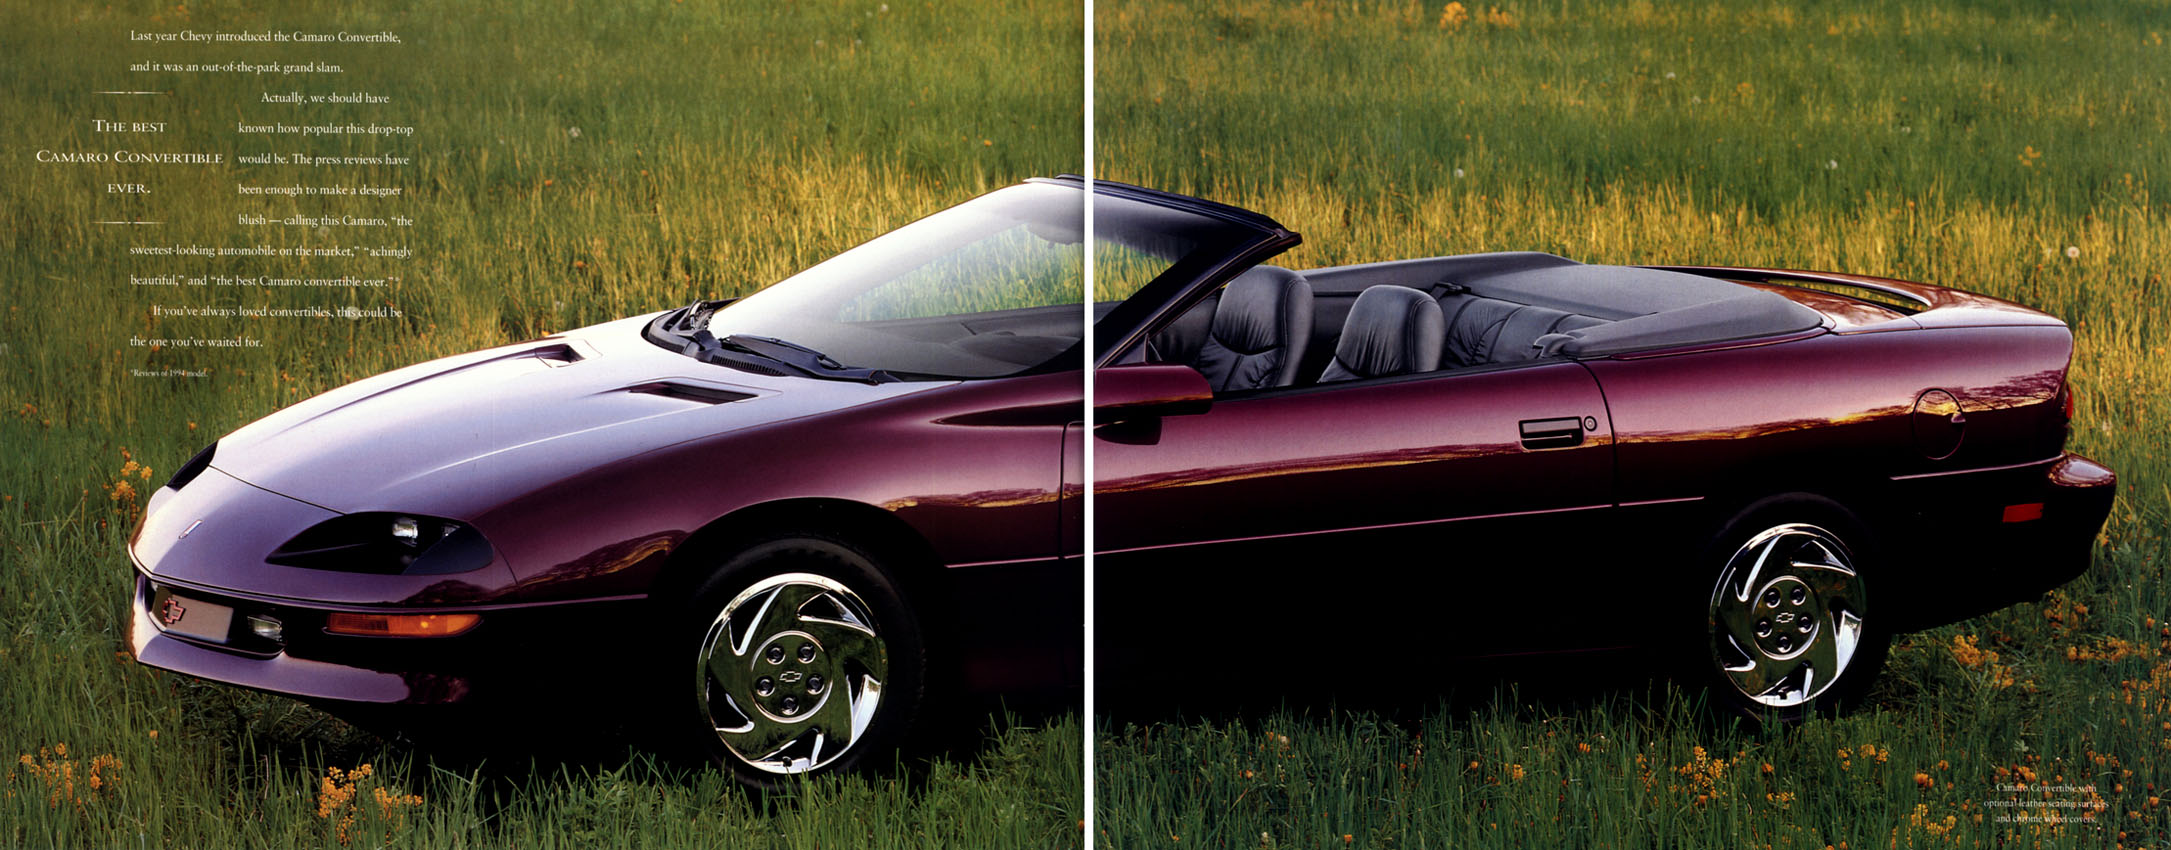 1995_Chevrolet_Camaro-12-13